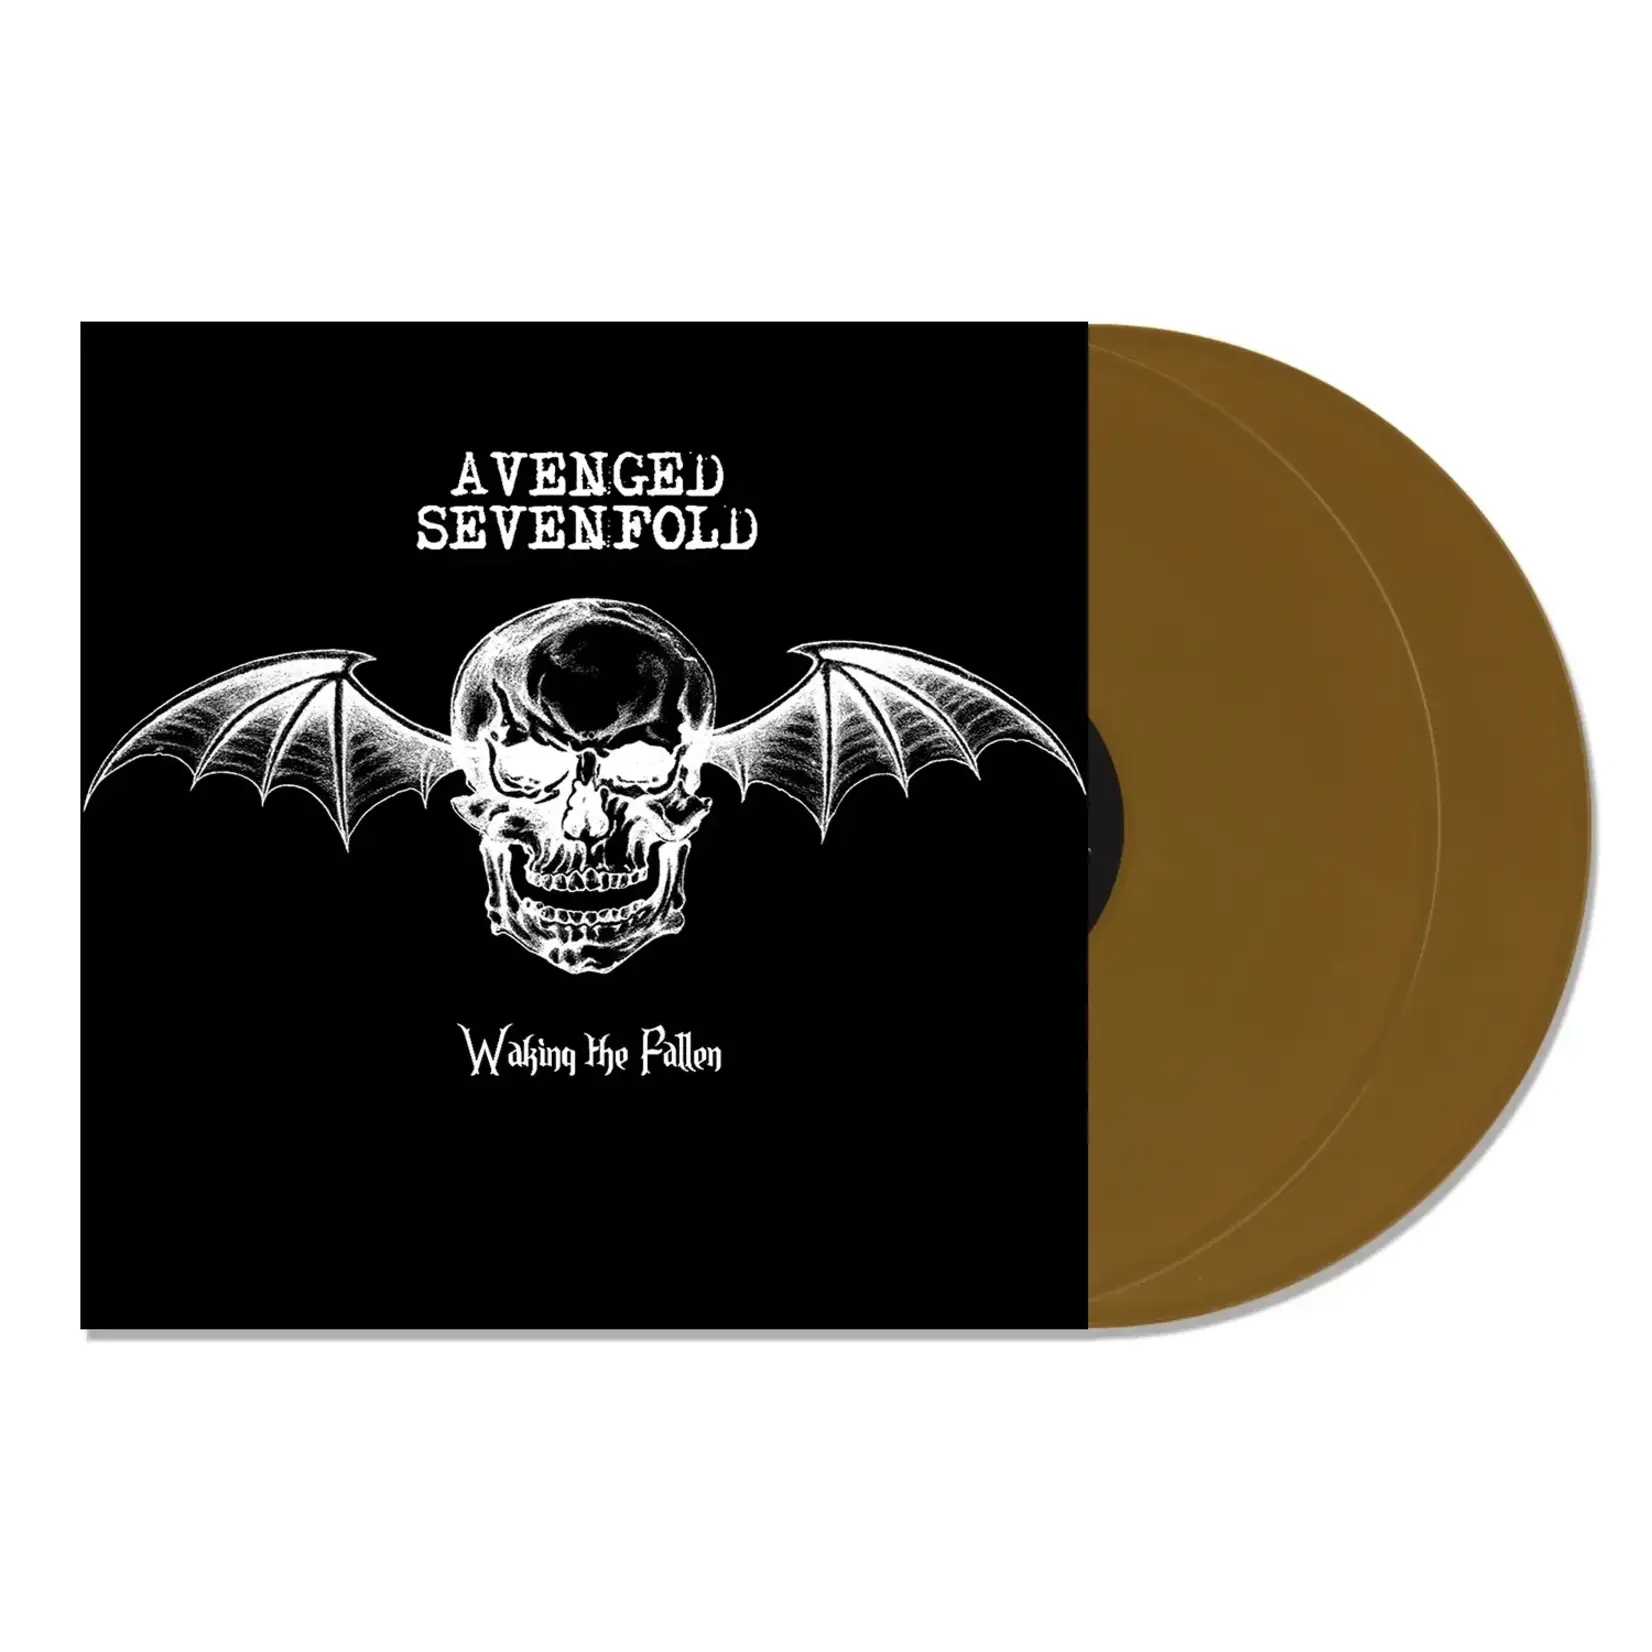 [New] Avenged Sevenfold - Waking the Fallen (2LP, gold vinyl, 20th anniversary edition)